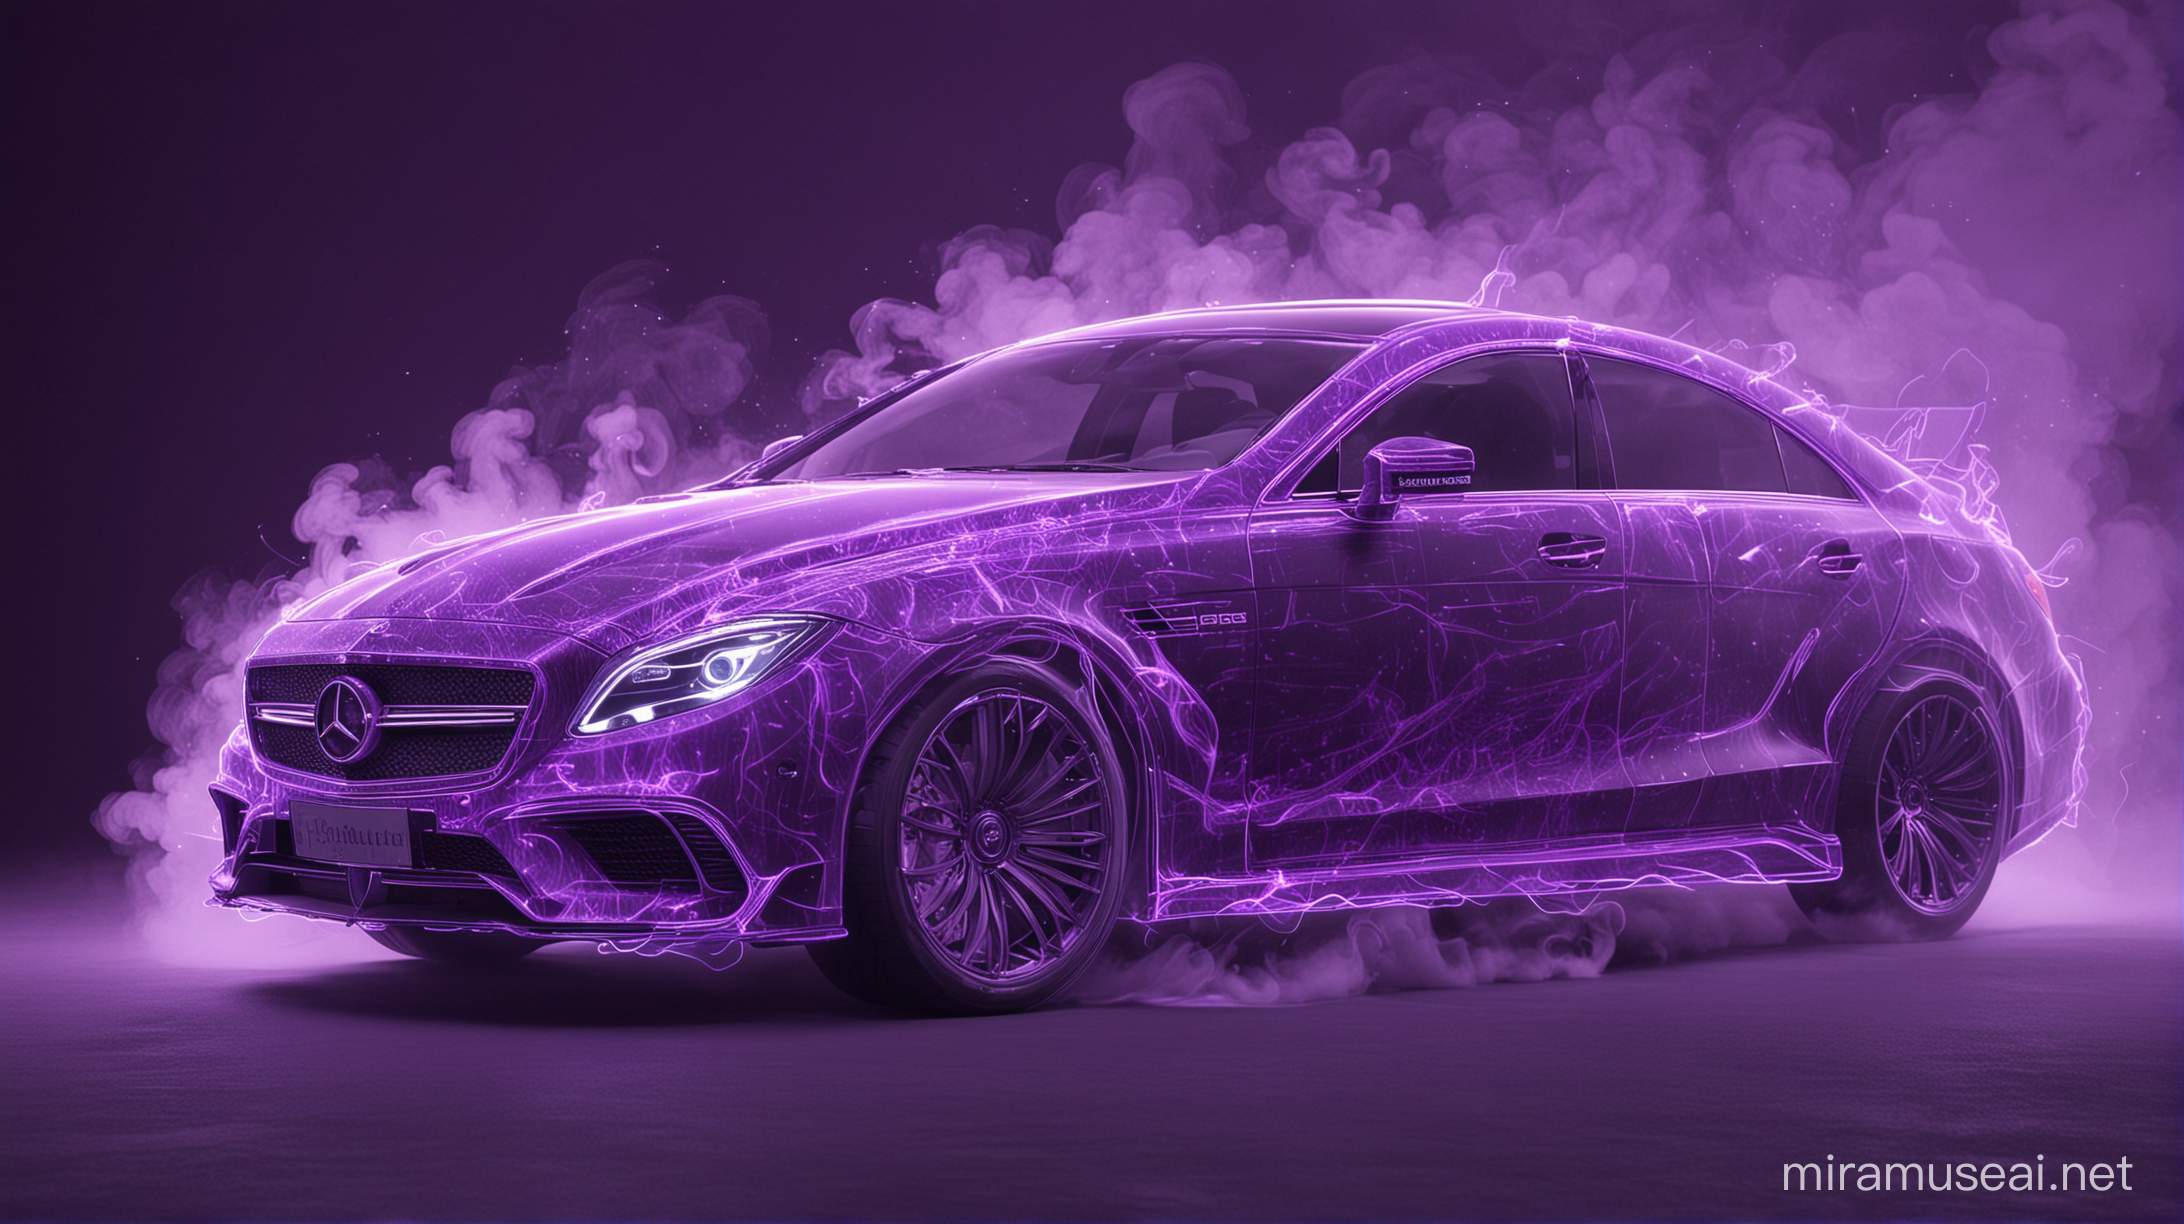 Neonhonda Mercedes Benz CLS Charging Through Swirling Smoke in Purple Wireframe